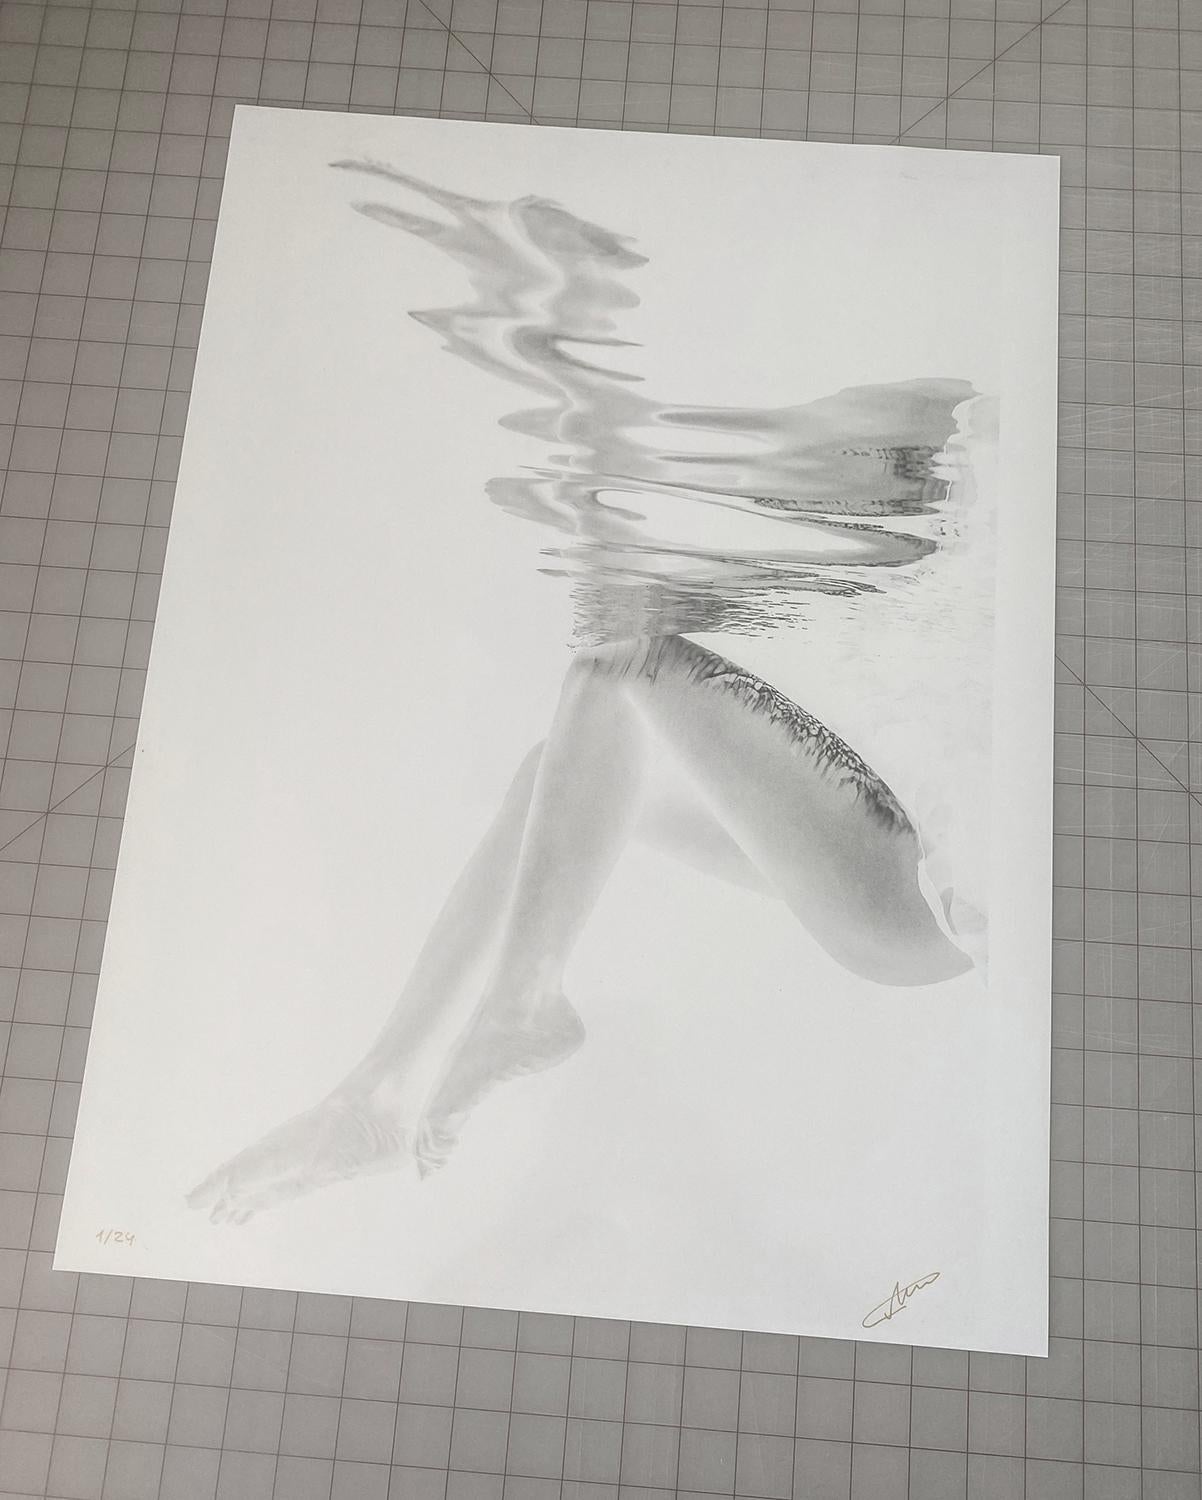 Sketch - underwater b&w photograph - archival pigment print 35x23